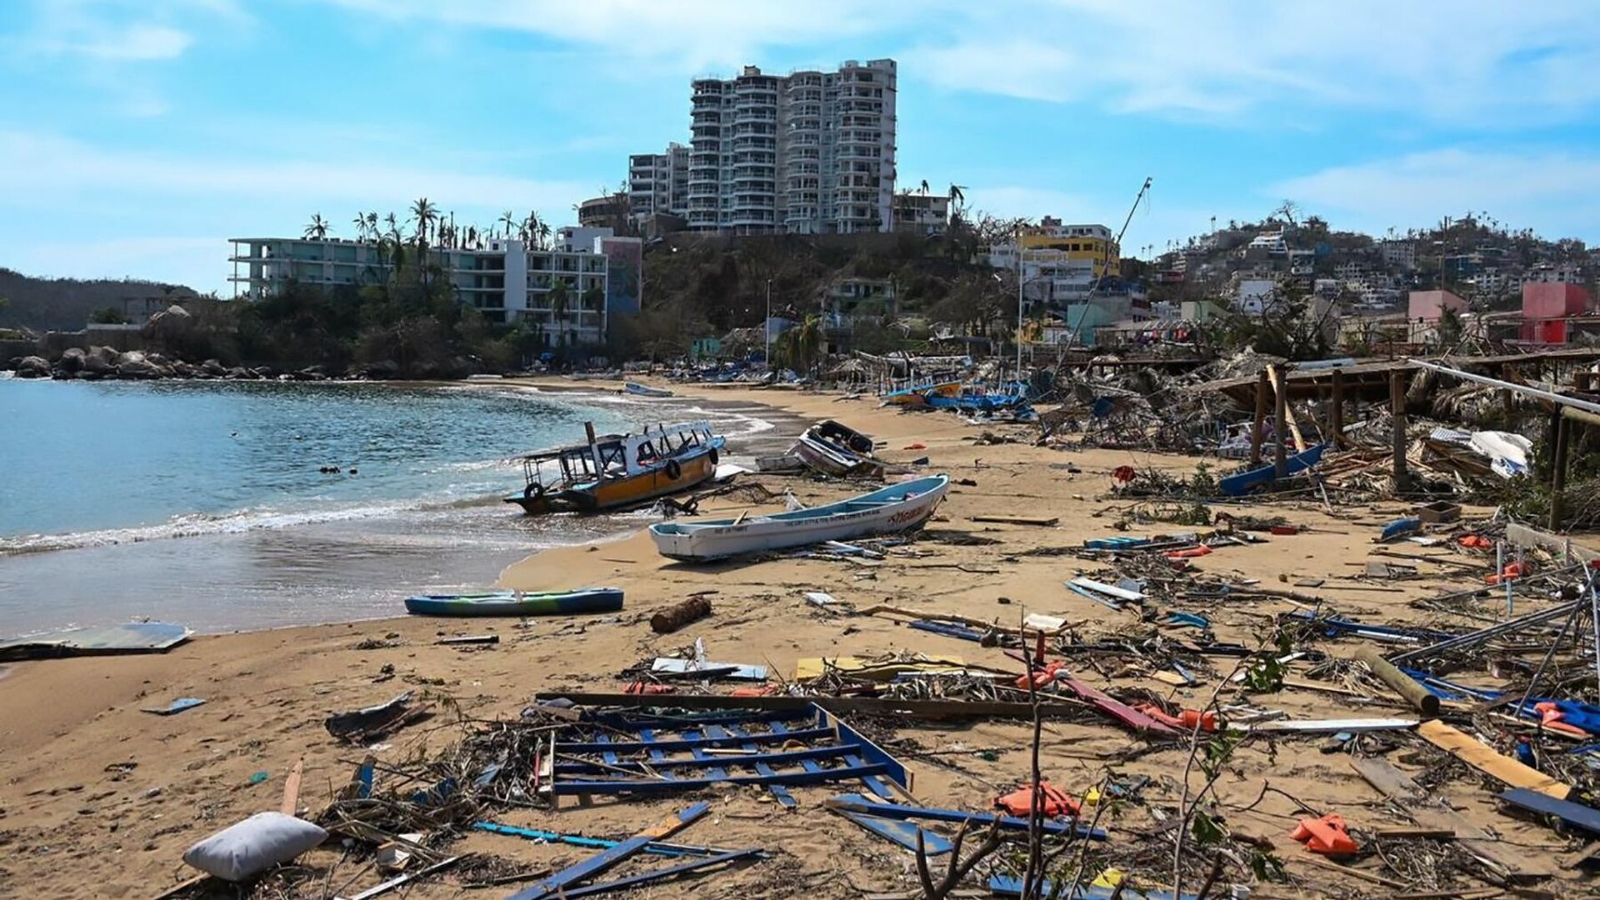 Hoteles de Acapulco anuncian fecha de reapertura luego del paso del Huracán Otis